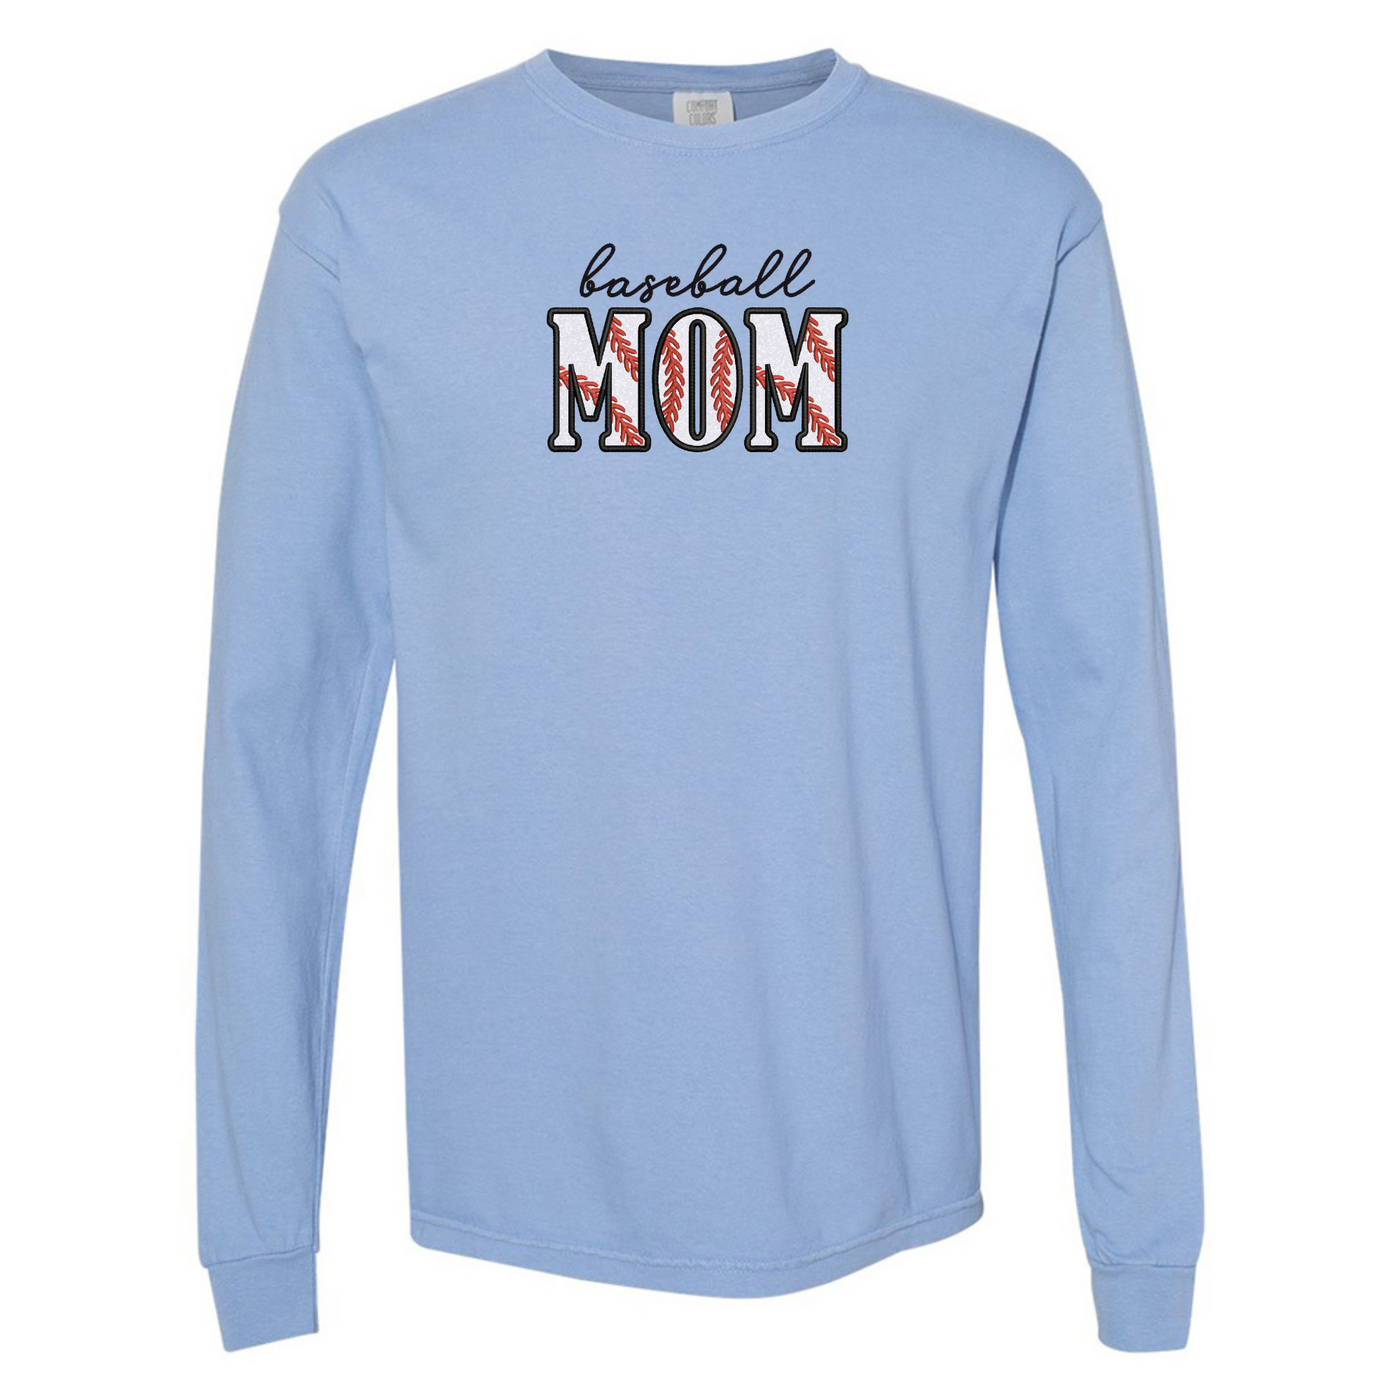 Glitter Embroidery 'Baseball Mama/Mom' Embroidered Long Sleeve T-Shirt